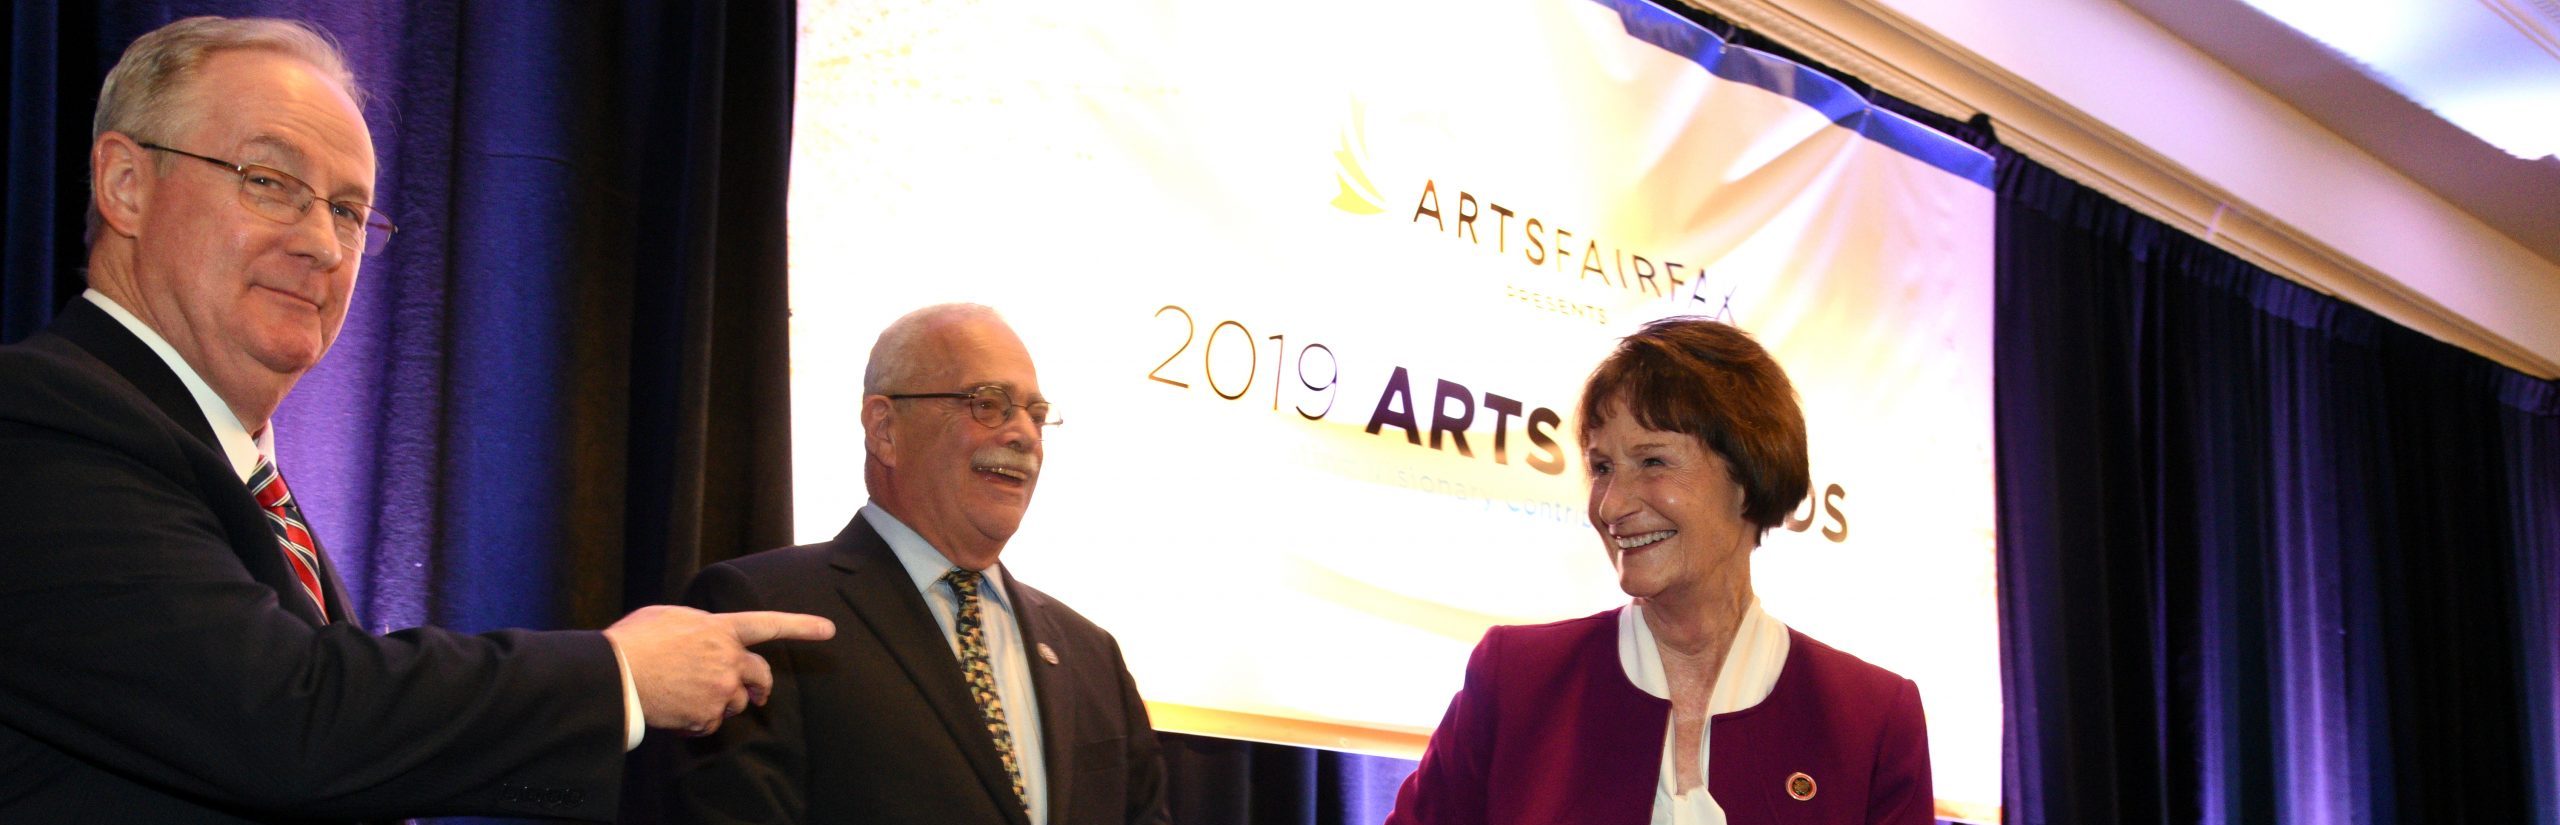 ARTSFAIRFAX Supports Fairfax County Arts Research Efforts